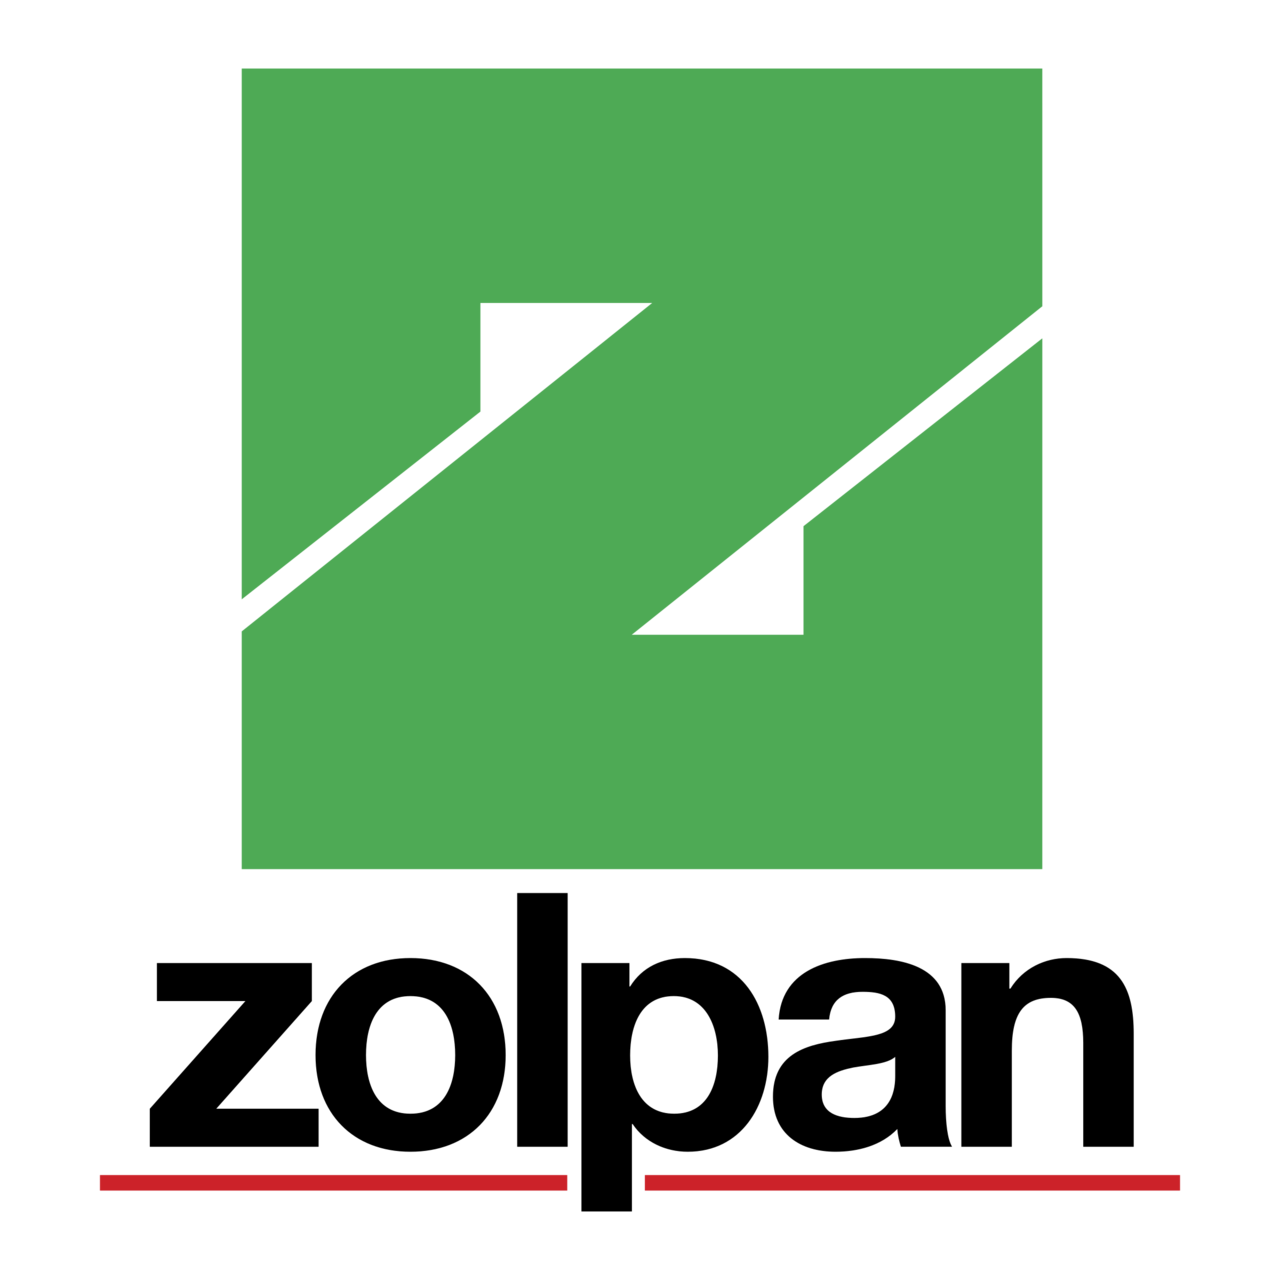 Zolpan logo